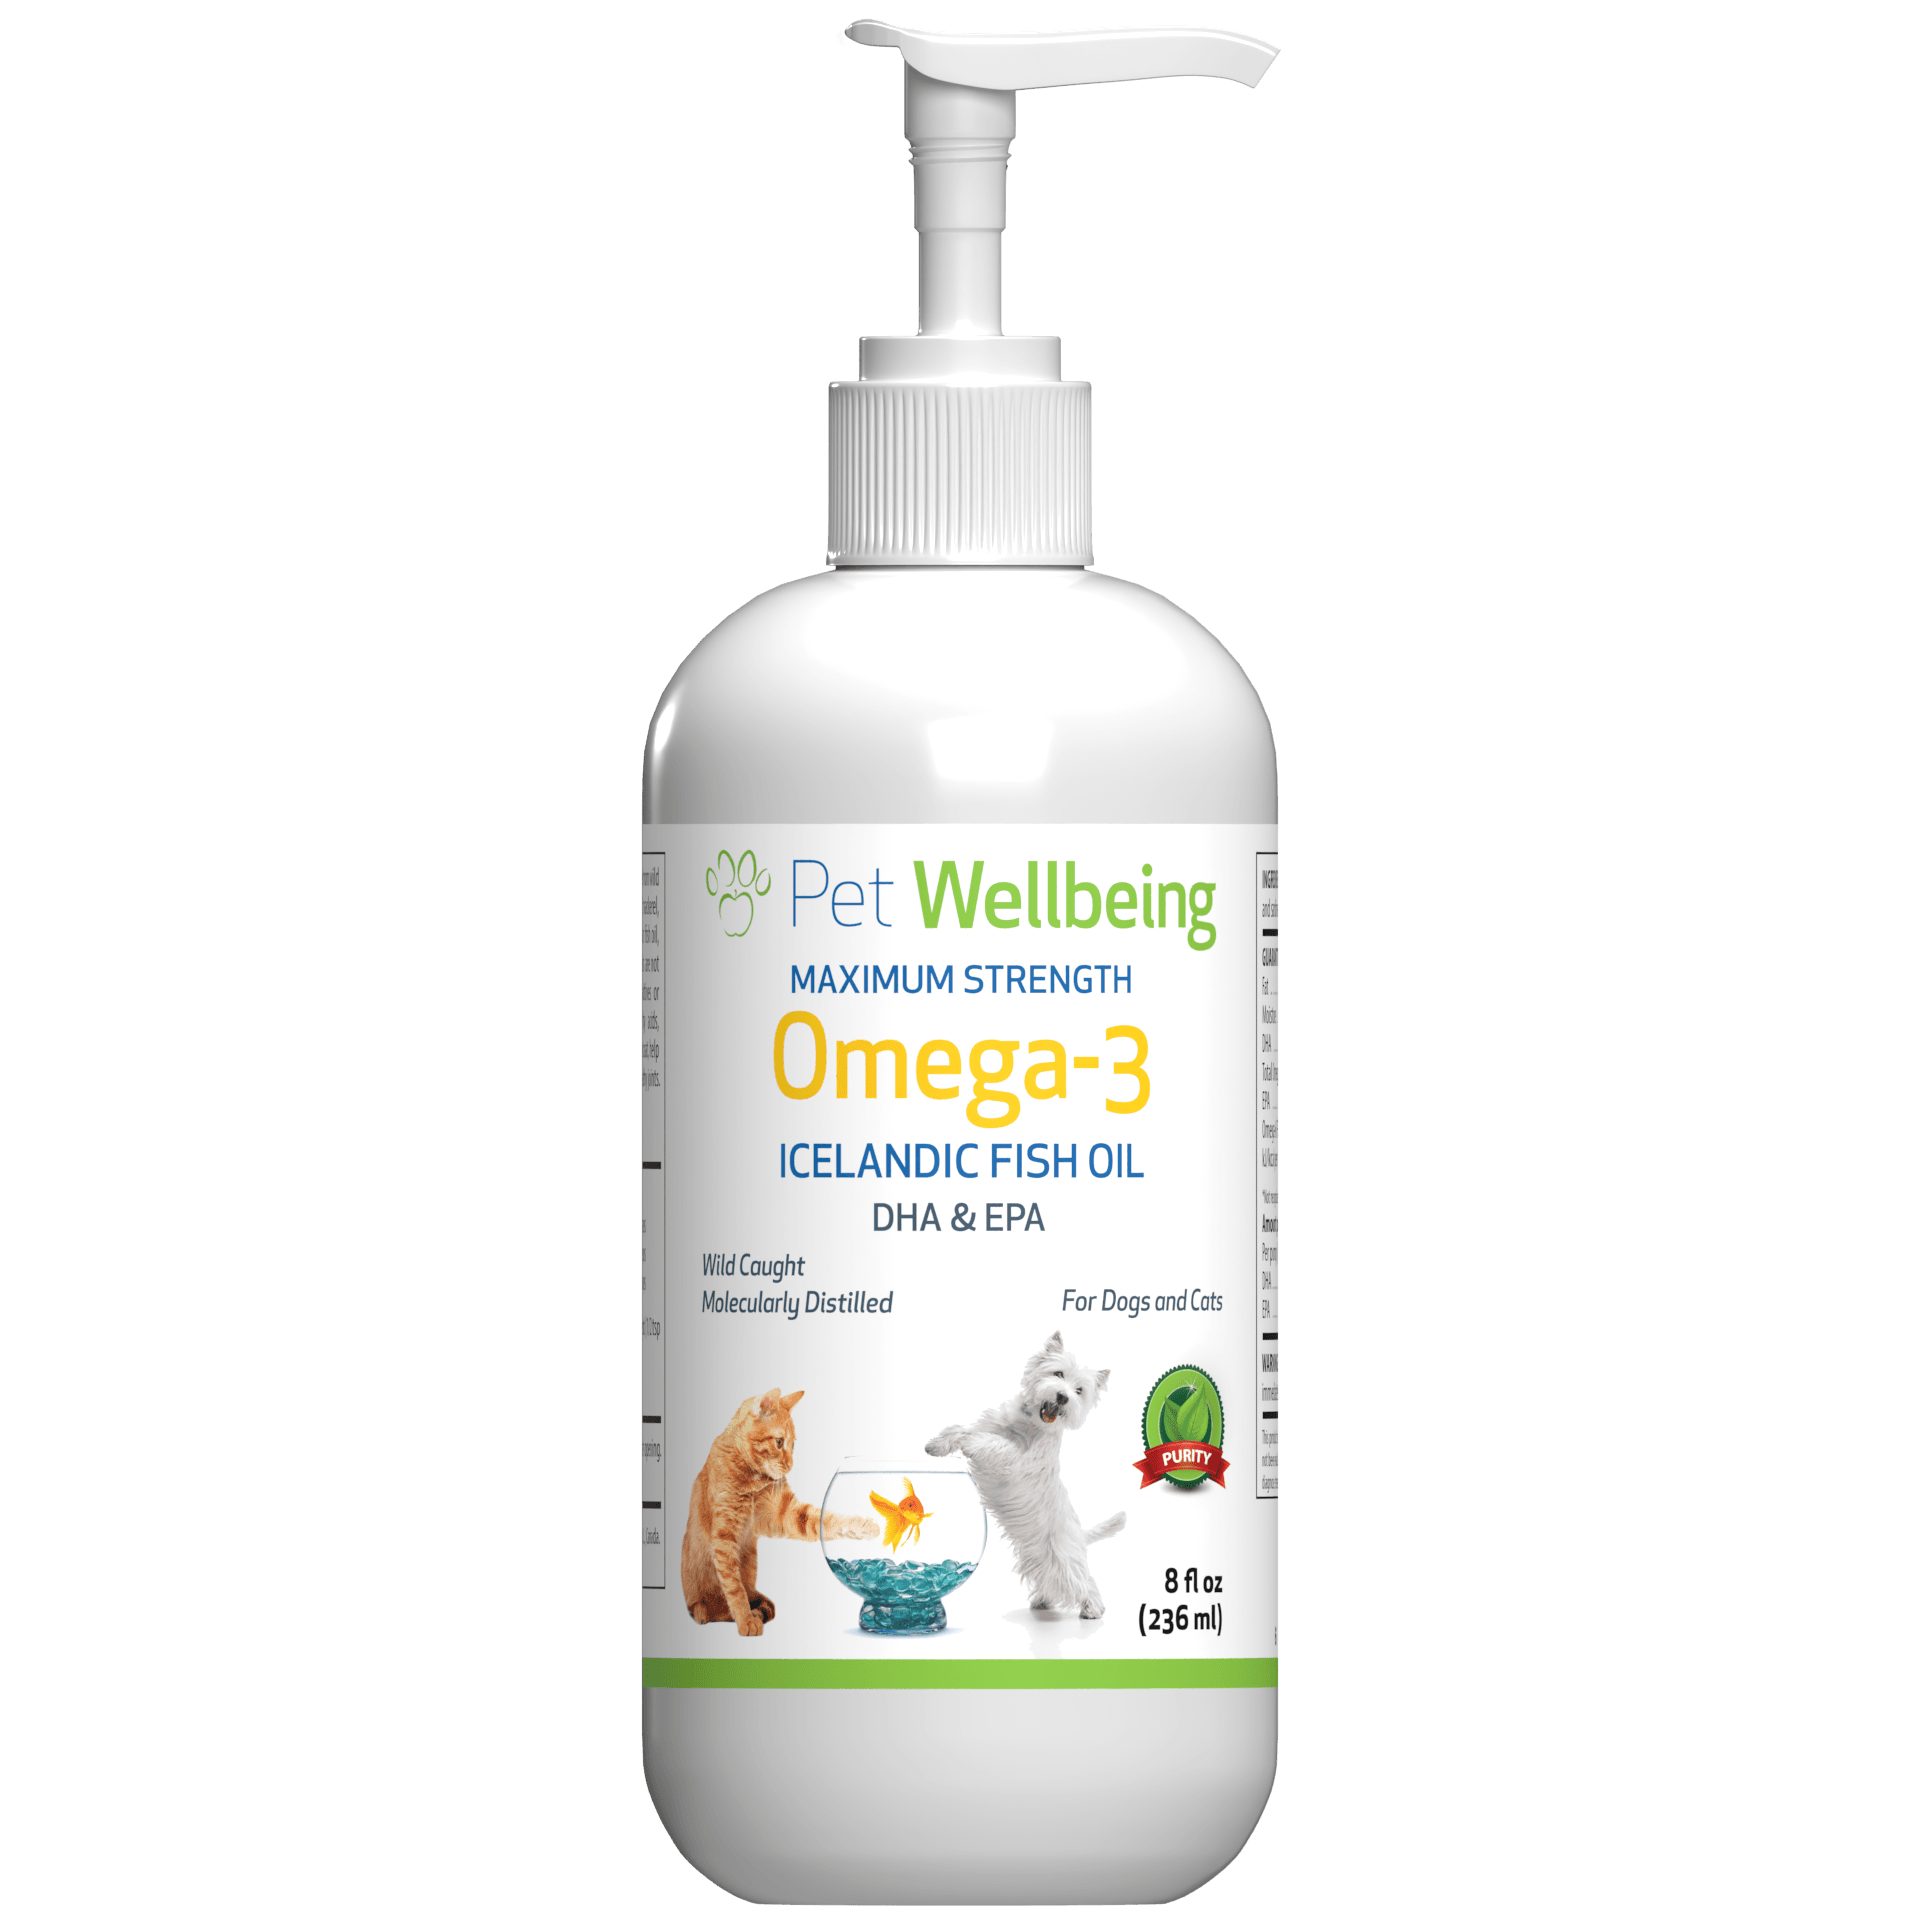 Pet Wellbeing Omega-3 Icelandic Fish Oil bottle